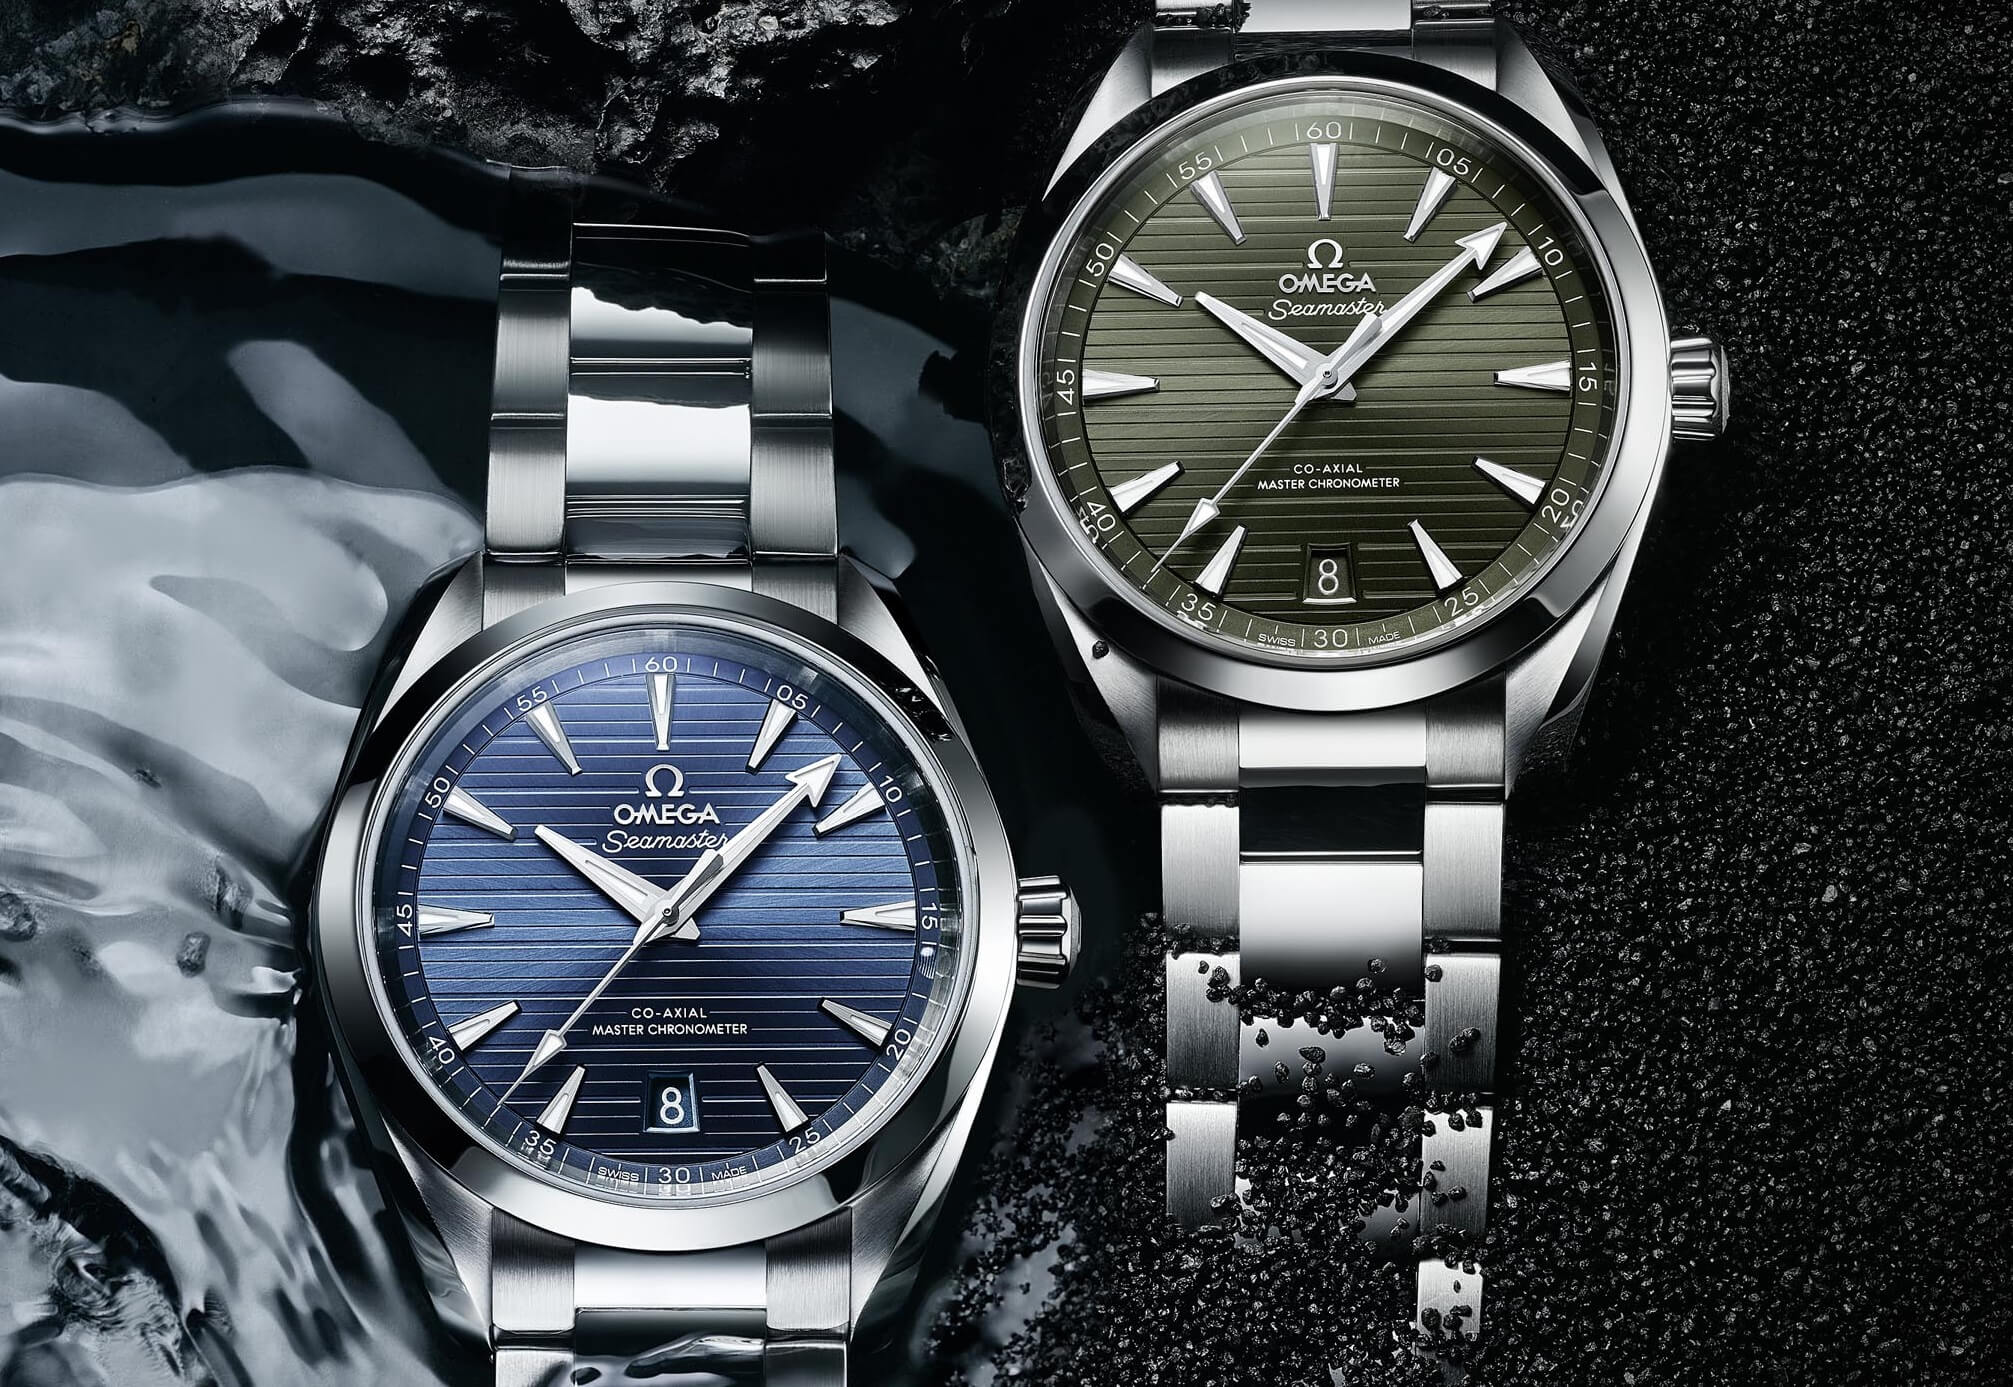 2 New Fake Omega Aqua Terra Watches Of 